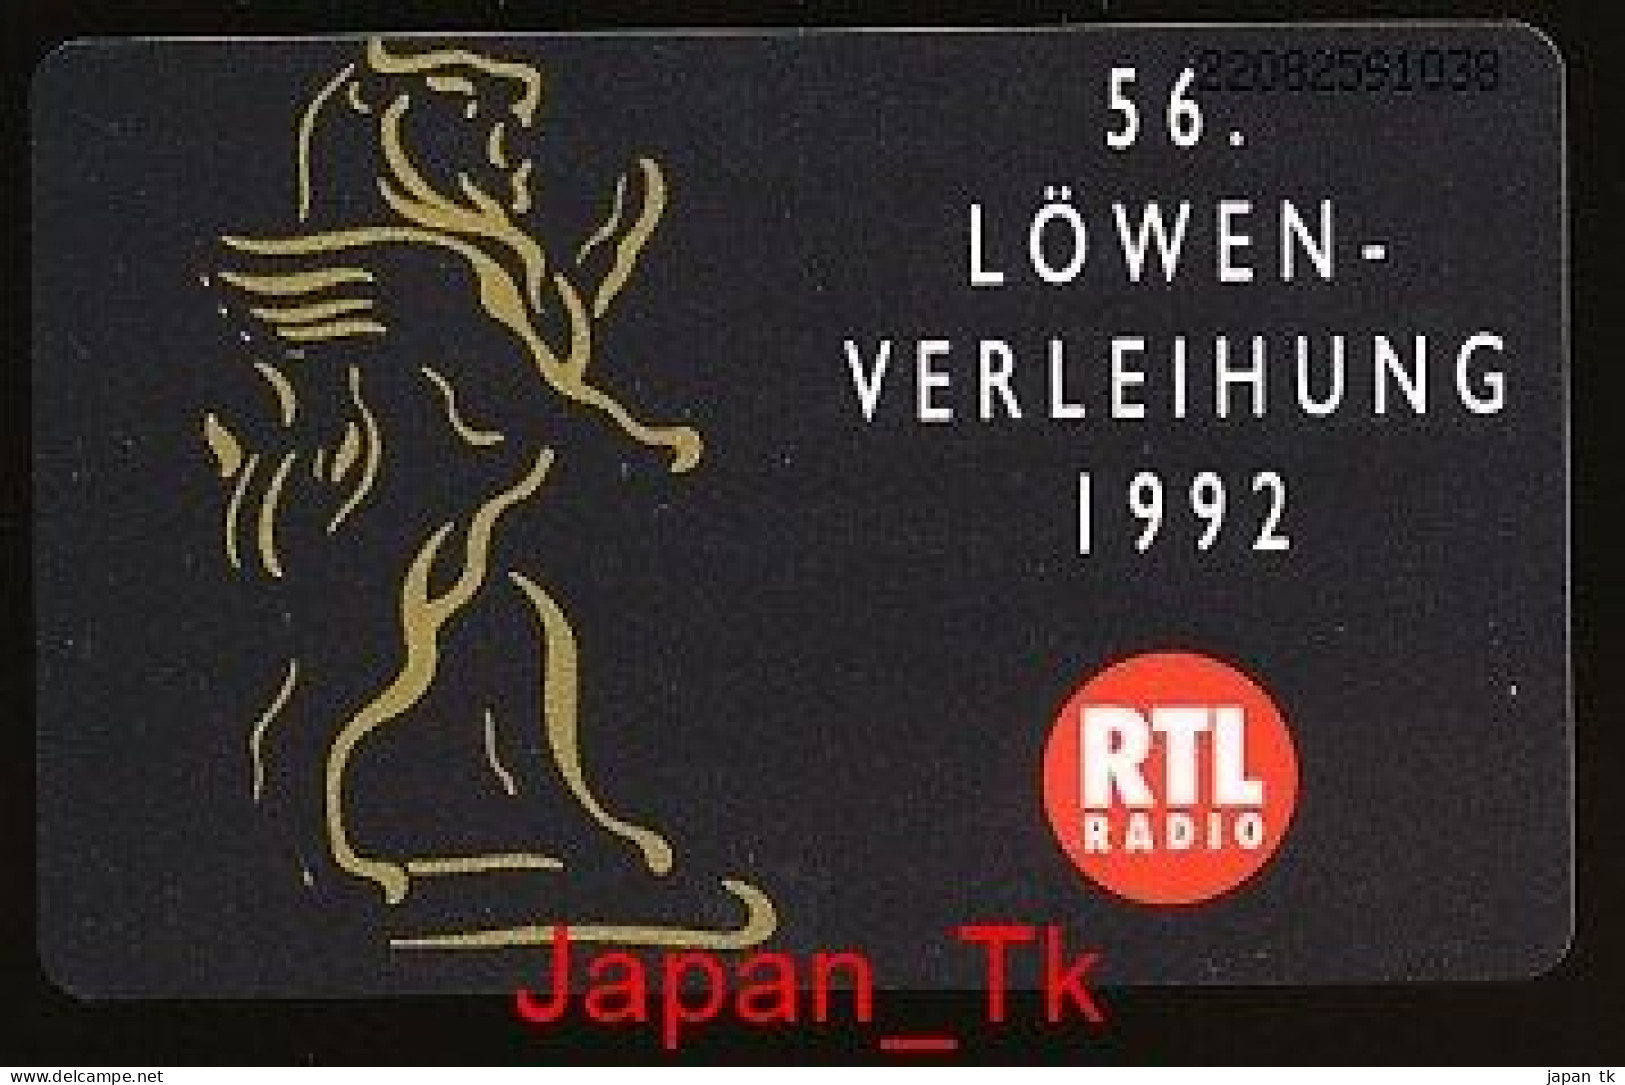 GERMANY K 192  92  RTL Radio - Aufl  3 000 - Siehe Scan - K-Series : Customers Sets